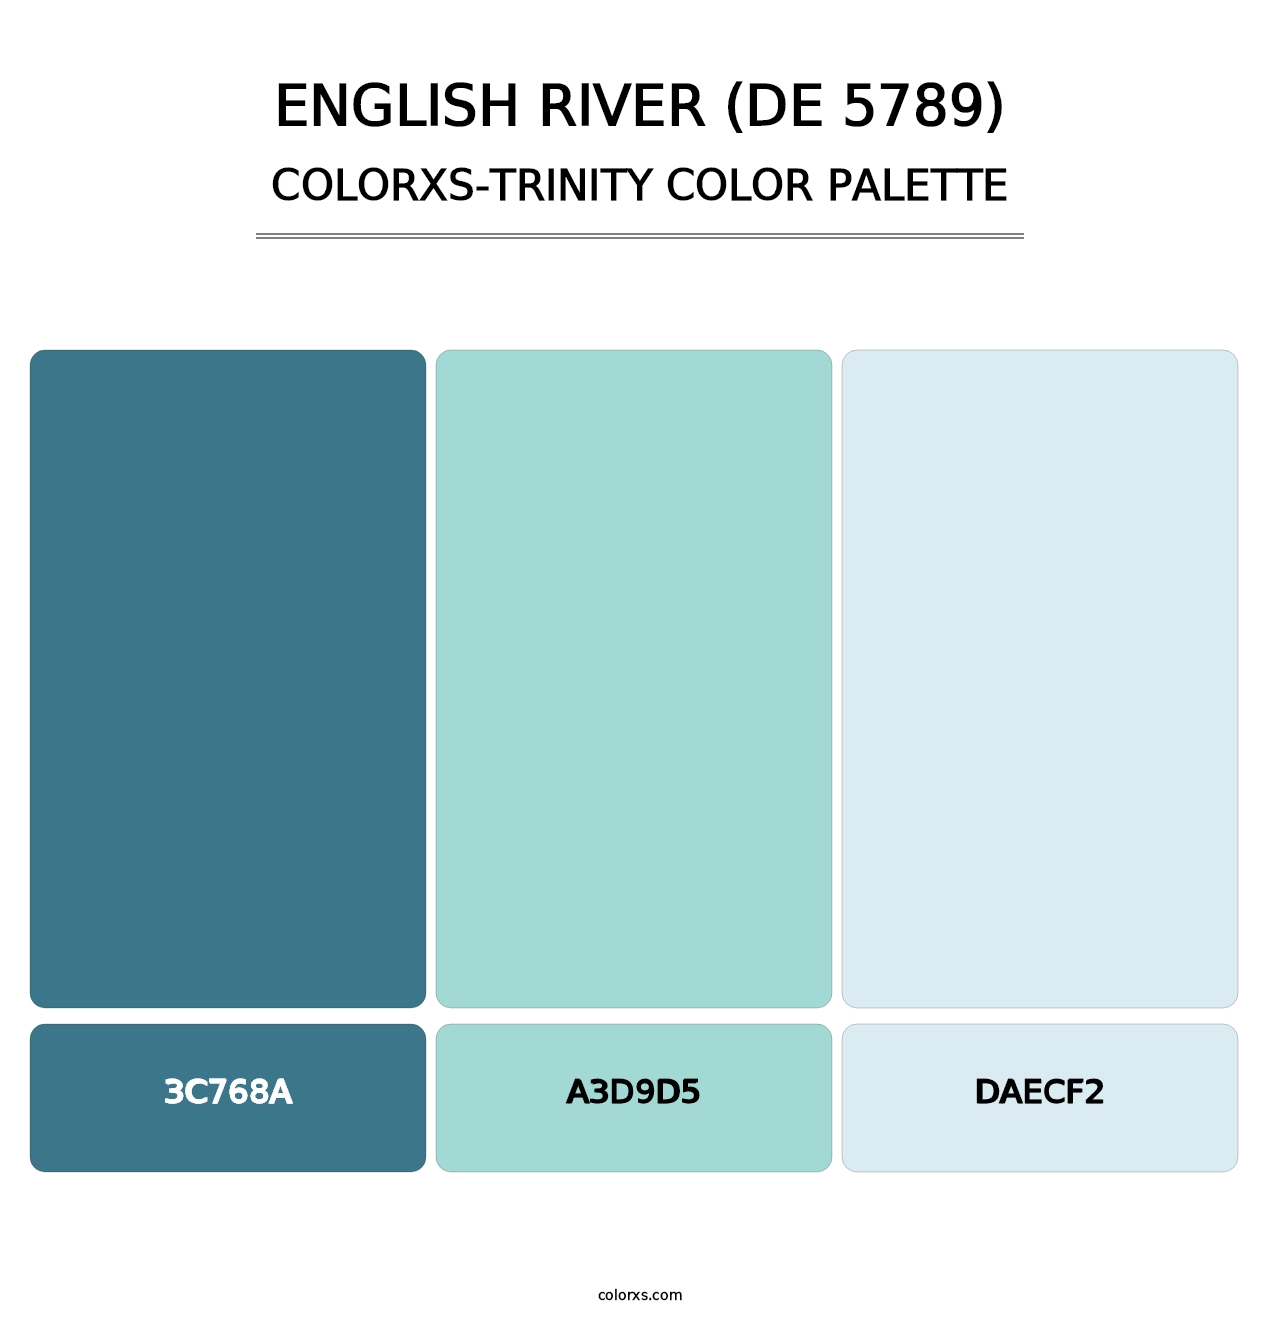 English River (DE 5789) - Colorxs Trinity Palette